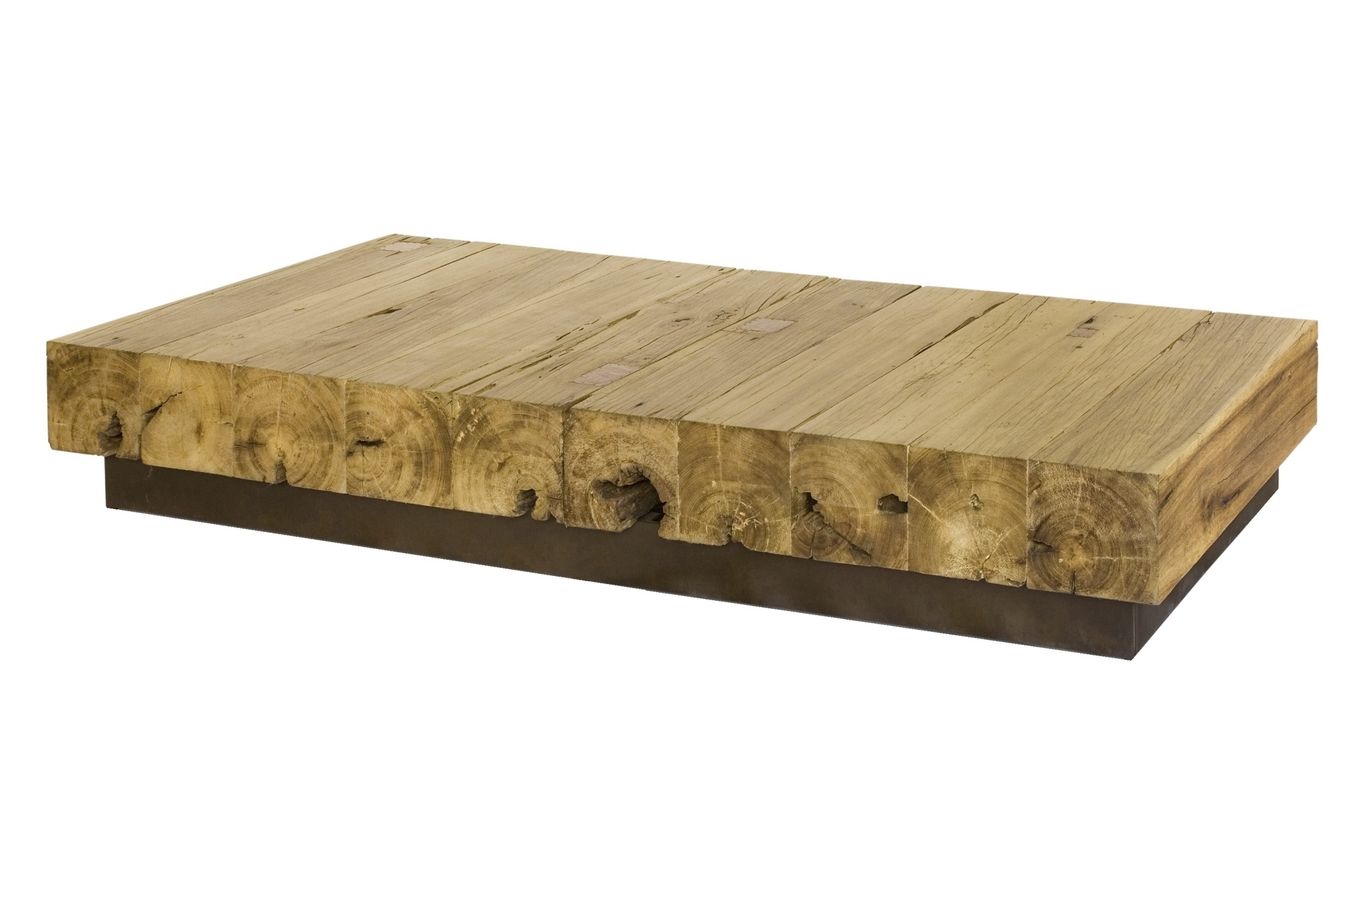 Studio Oblique: Some reclaimed wood furniture